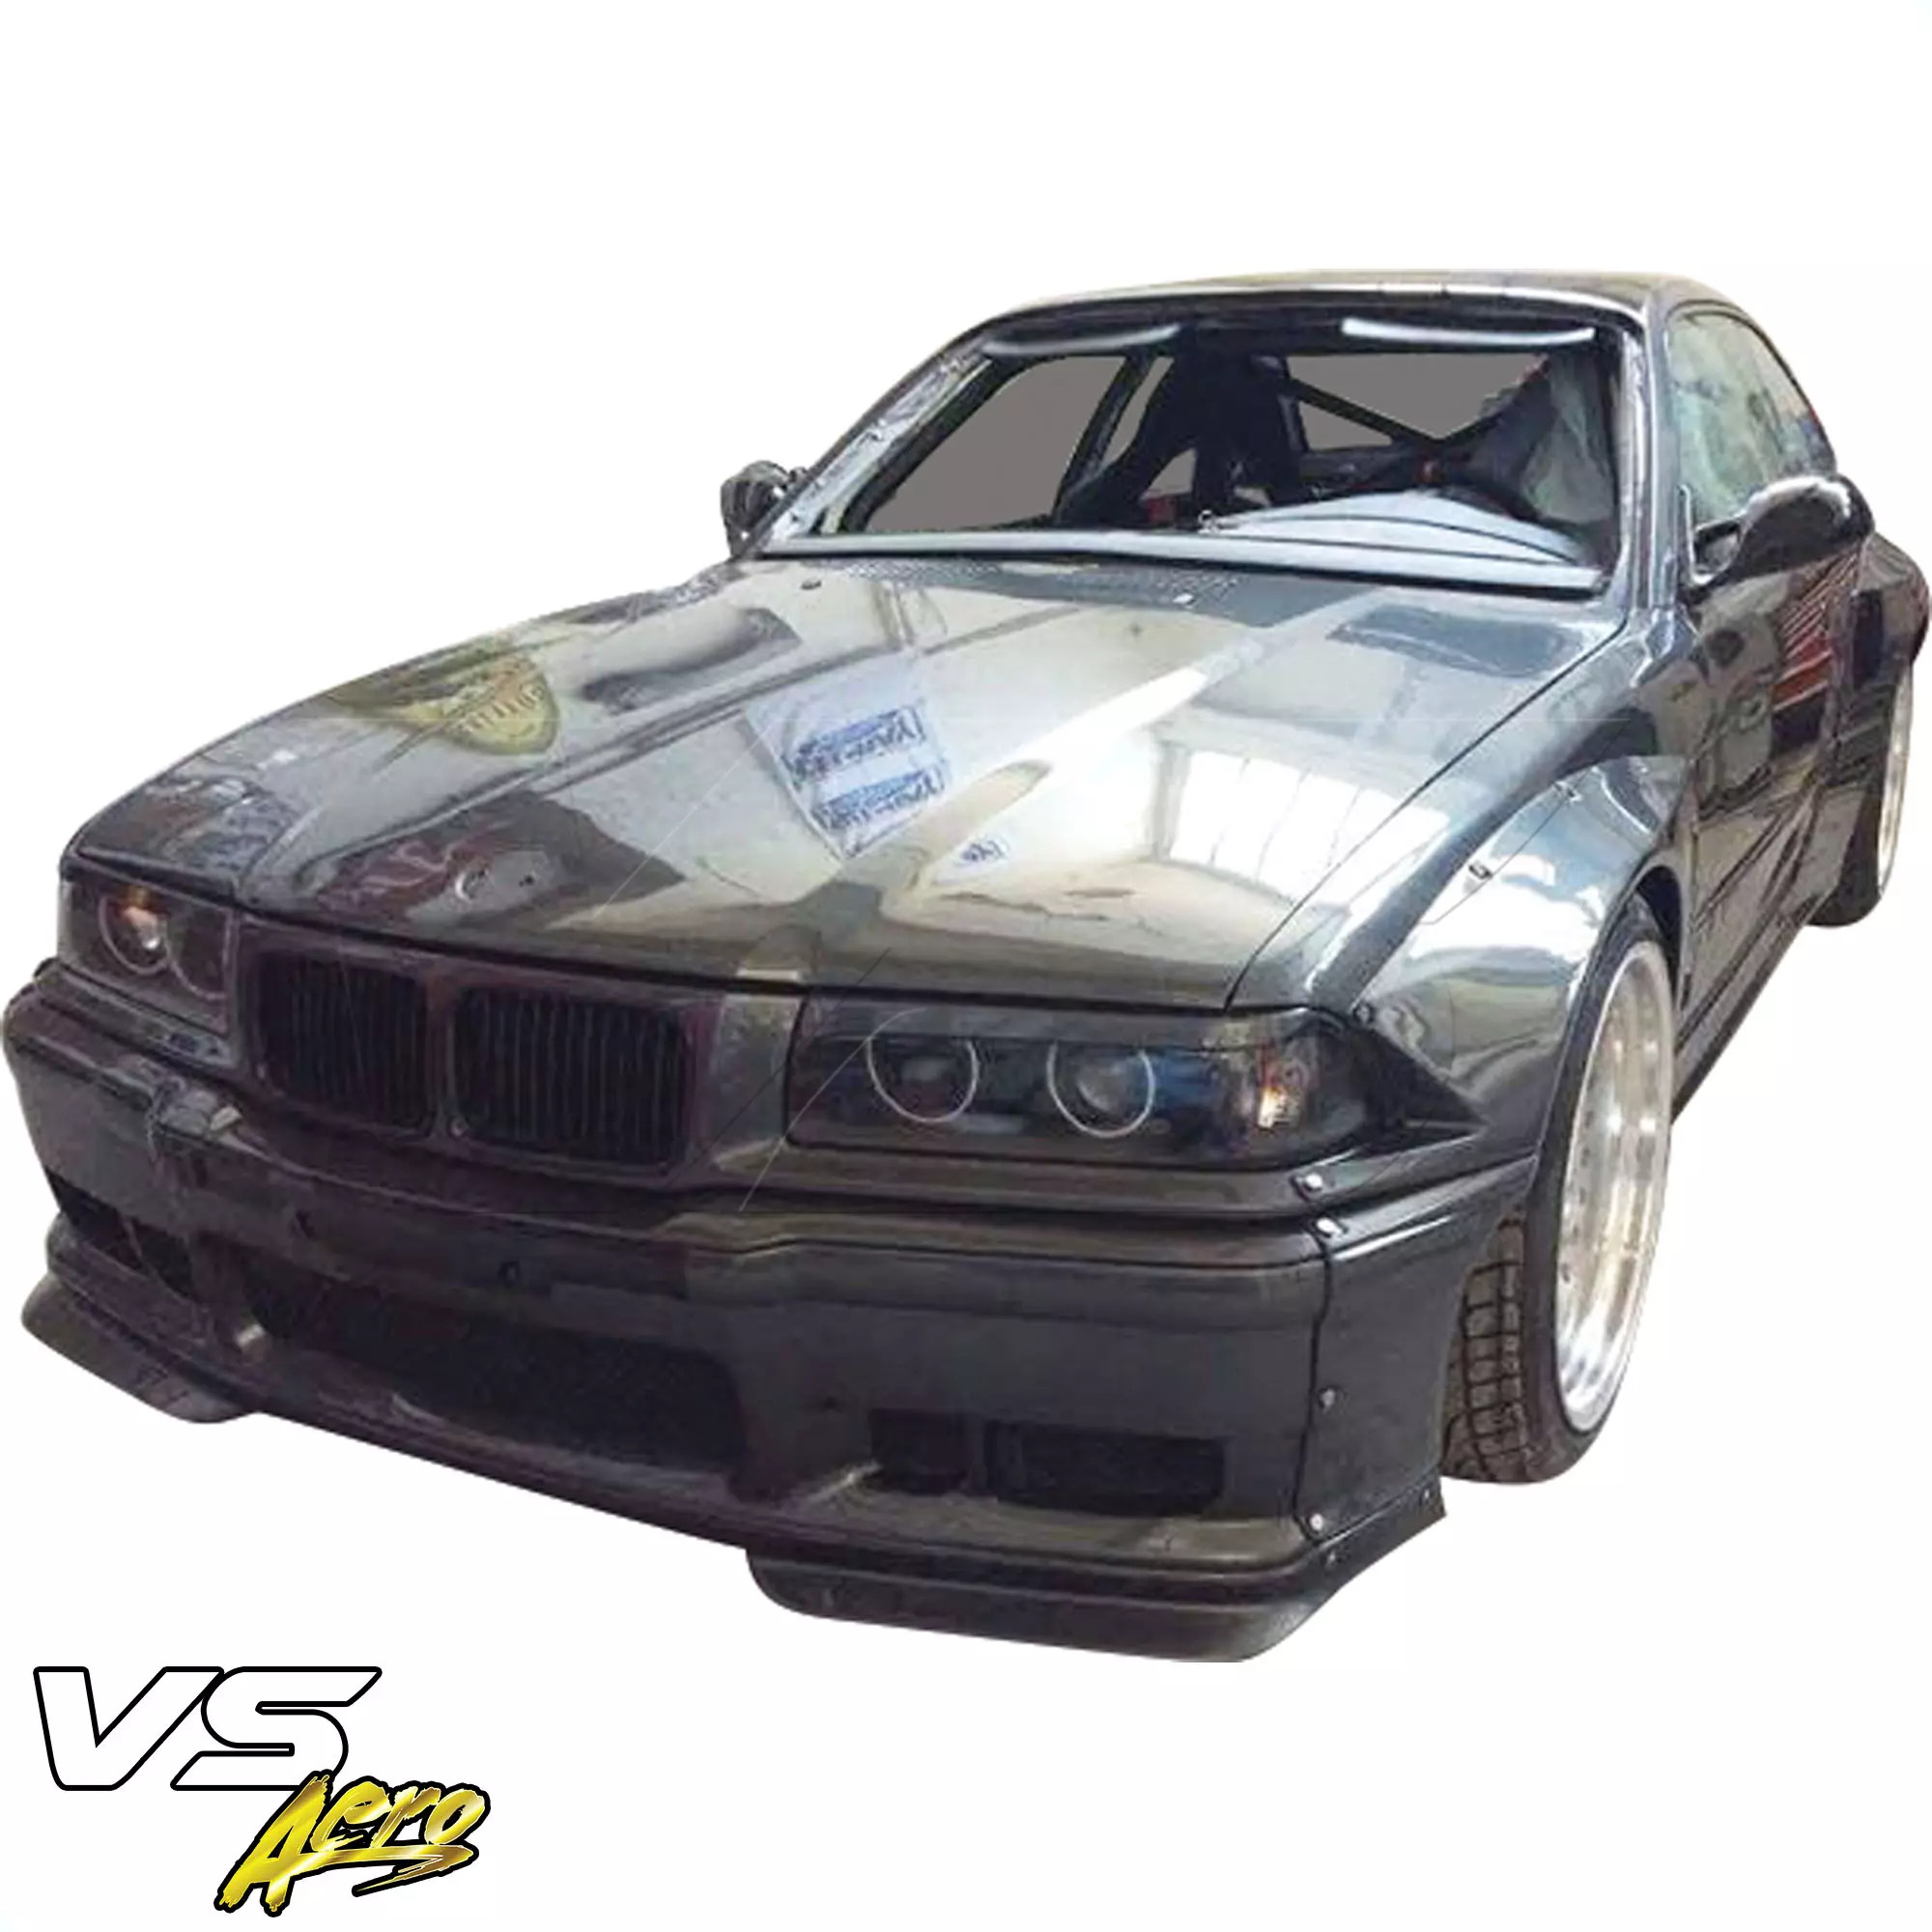 VSaero FRP TKYO Wide Body Kit 12pc w Wing > BMW 3-Series 325i 328i E36 1992-1998 > 2dr Coupe - Image 8